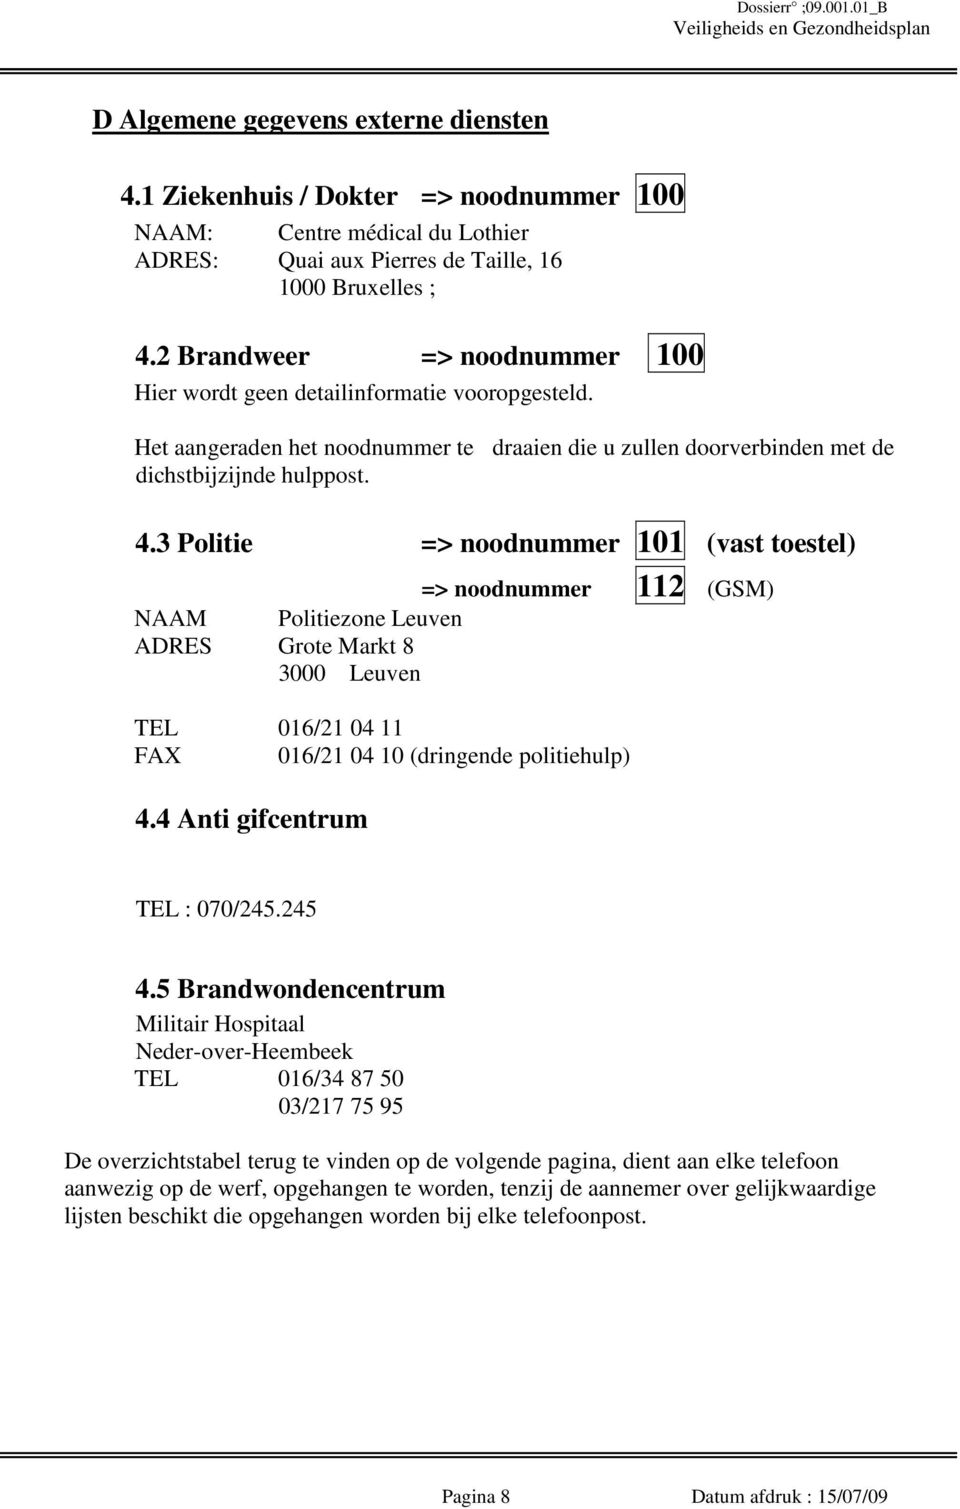 3 Politie => noodnummer 101 (vast toestel) => noodnummer 112 (GSM) NAAM Politiezone Leuven ADRES Grote Markt 8 3000 Leuven TEL 016/21 04 11 FAX 016/21 04 10 (dringende politiehulp) 4.